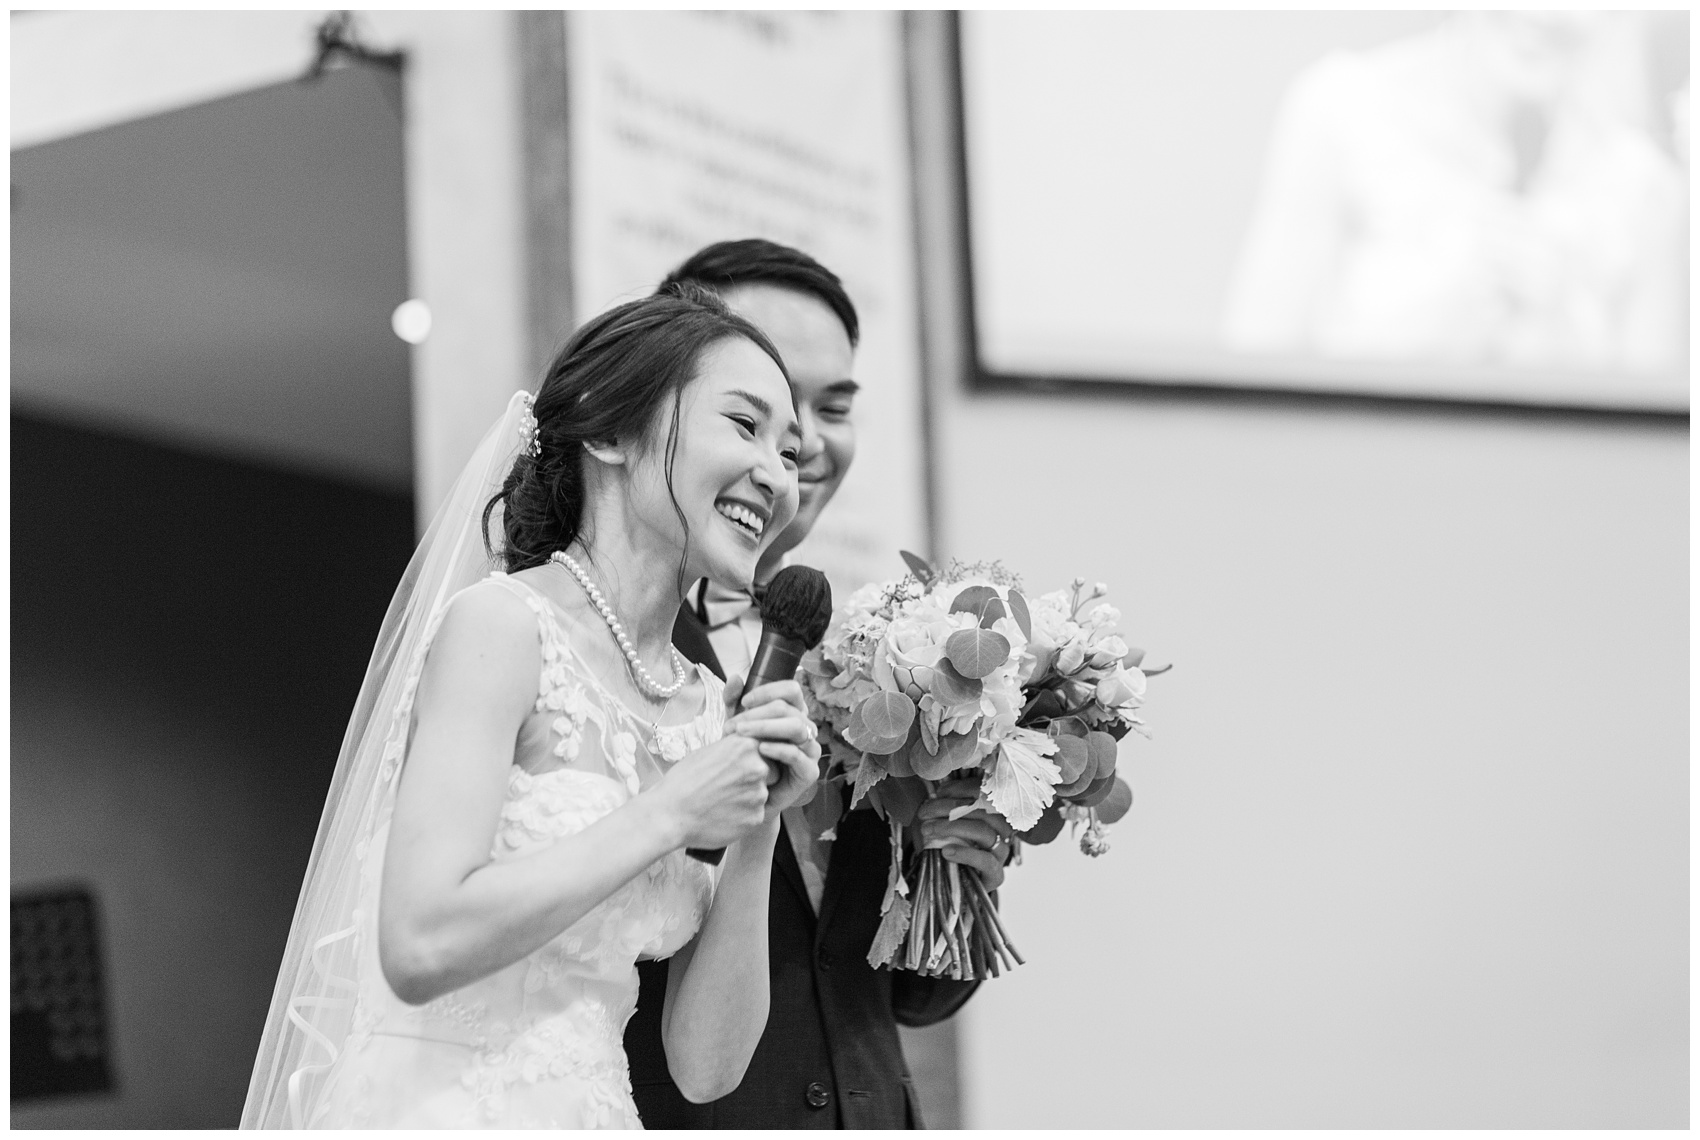 Burnaby Alliance Church wedding bride and groom speech